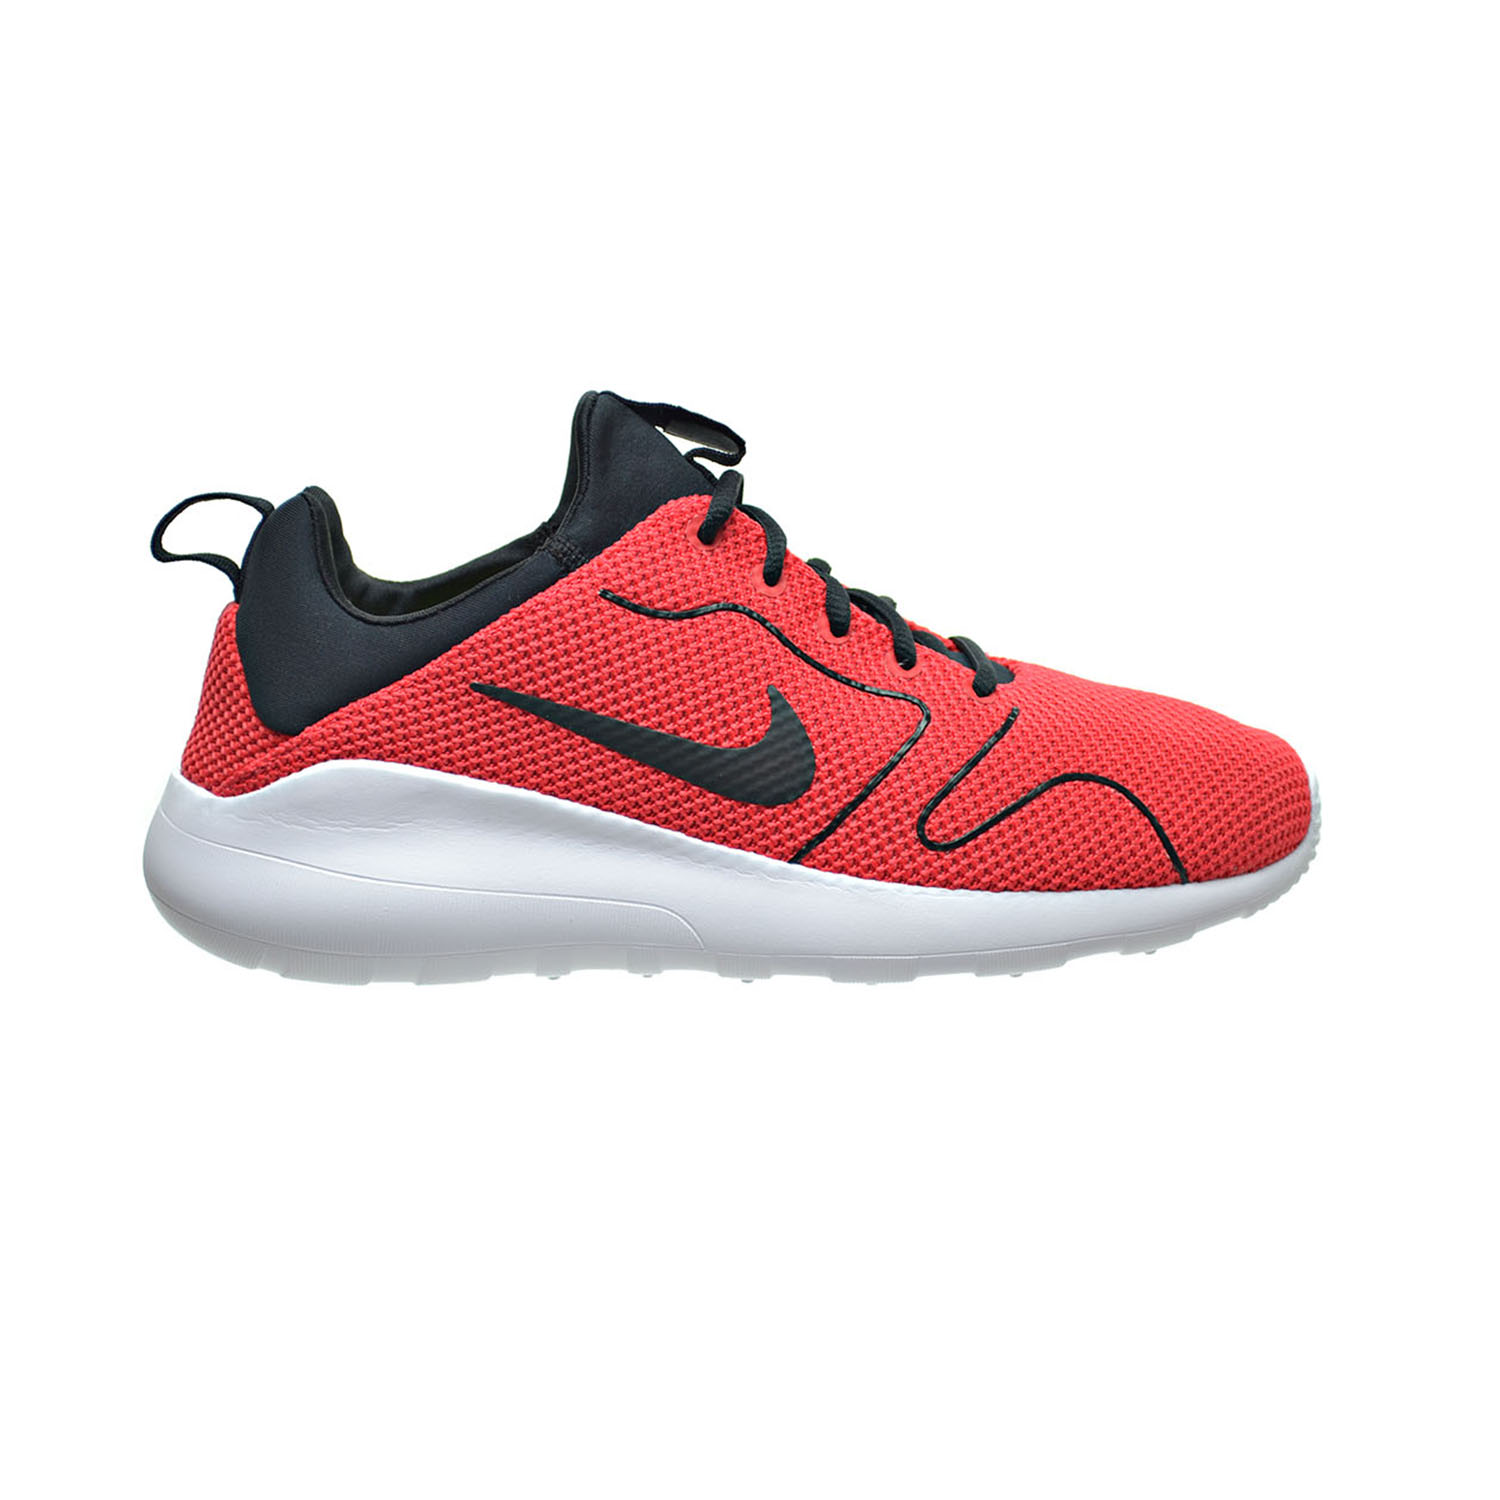 Nike Kaishi 2.0 SE Men's Shoes Action Red/Black/White 844838-601 | eBay